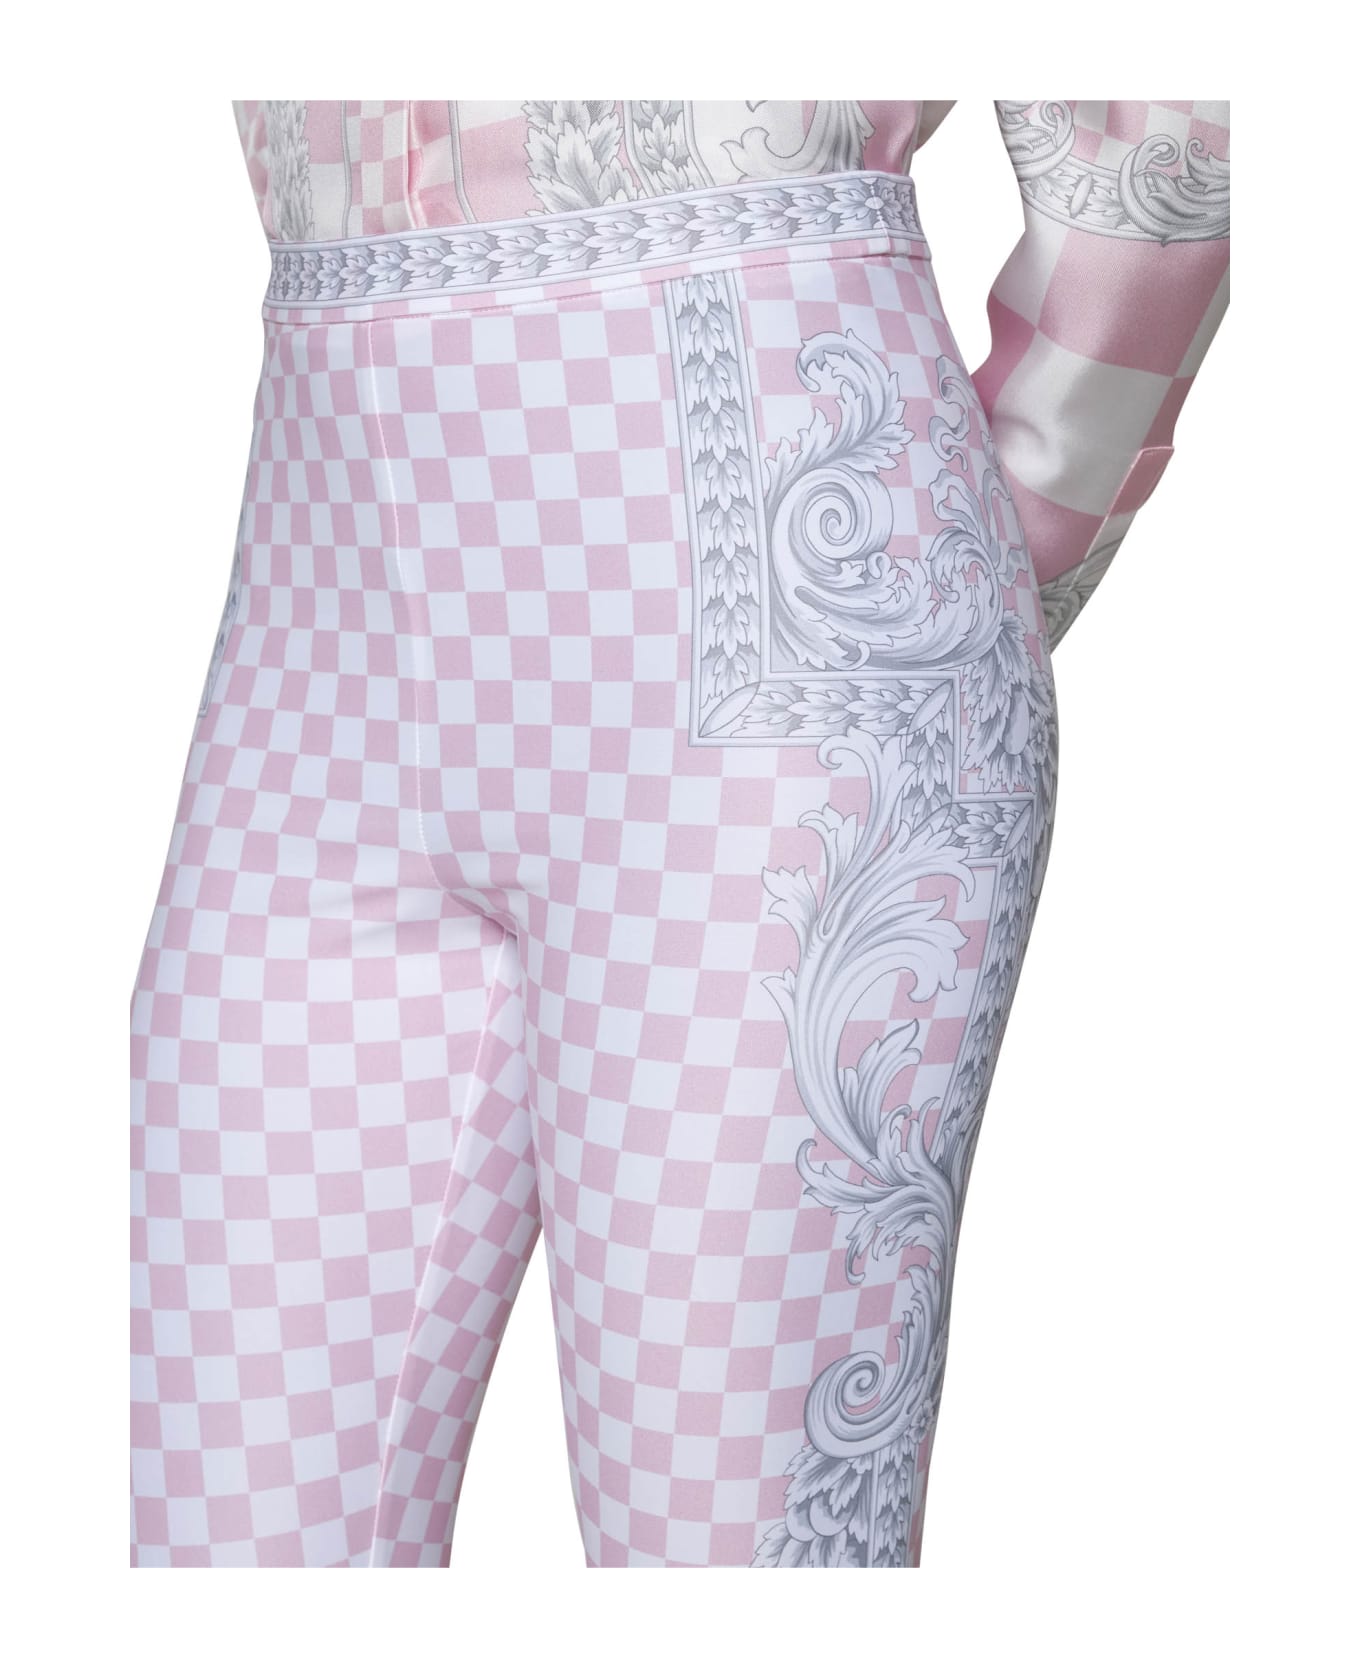 Versace Pants - Pastel pink + white + silver